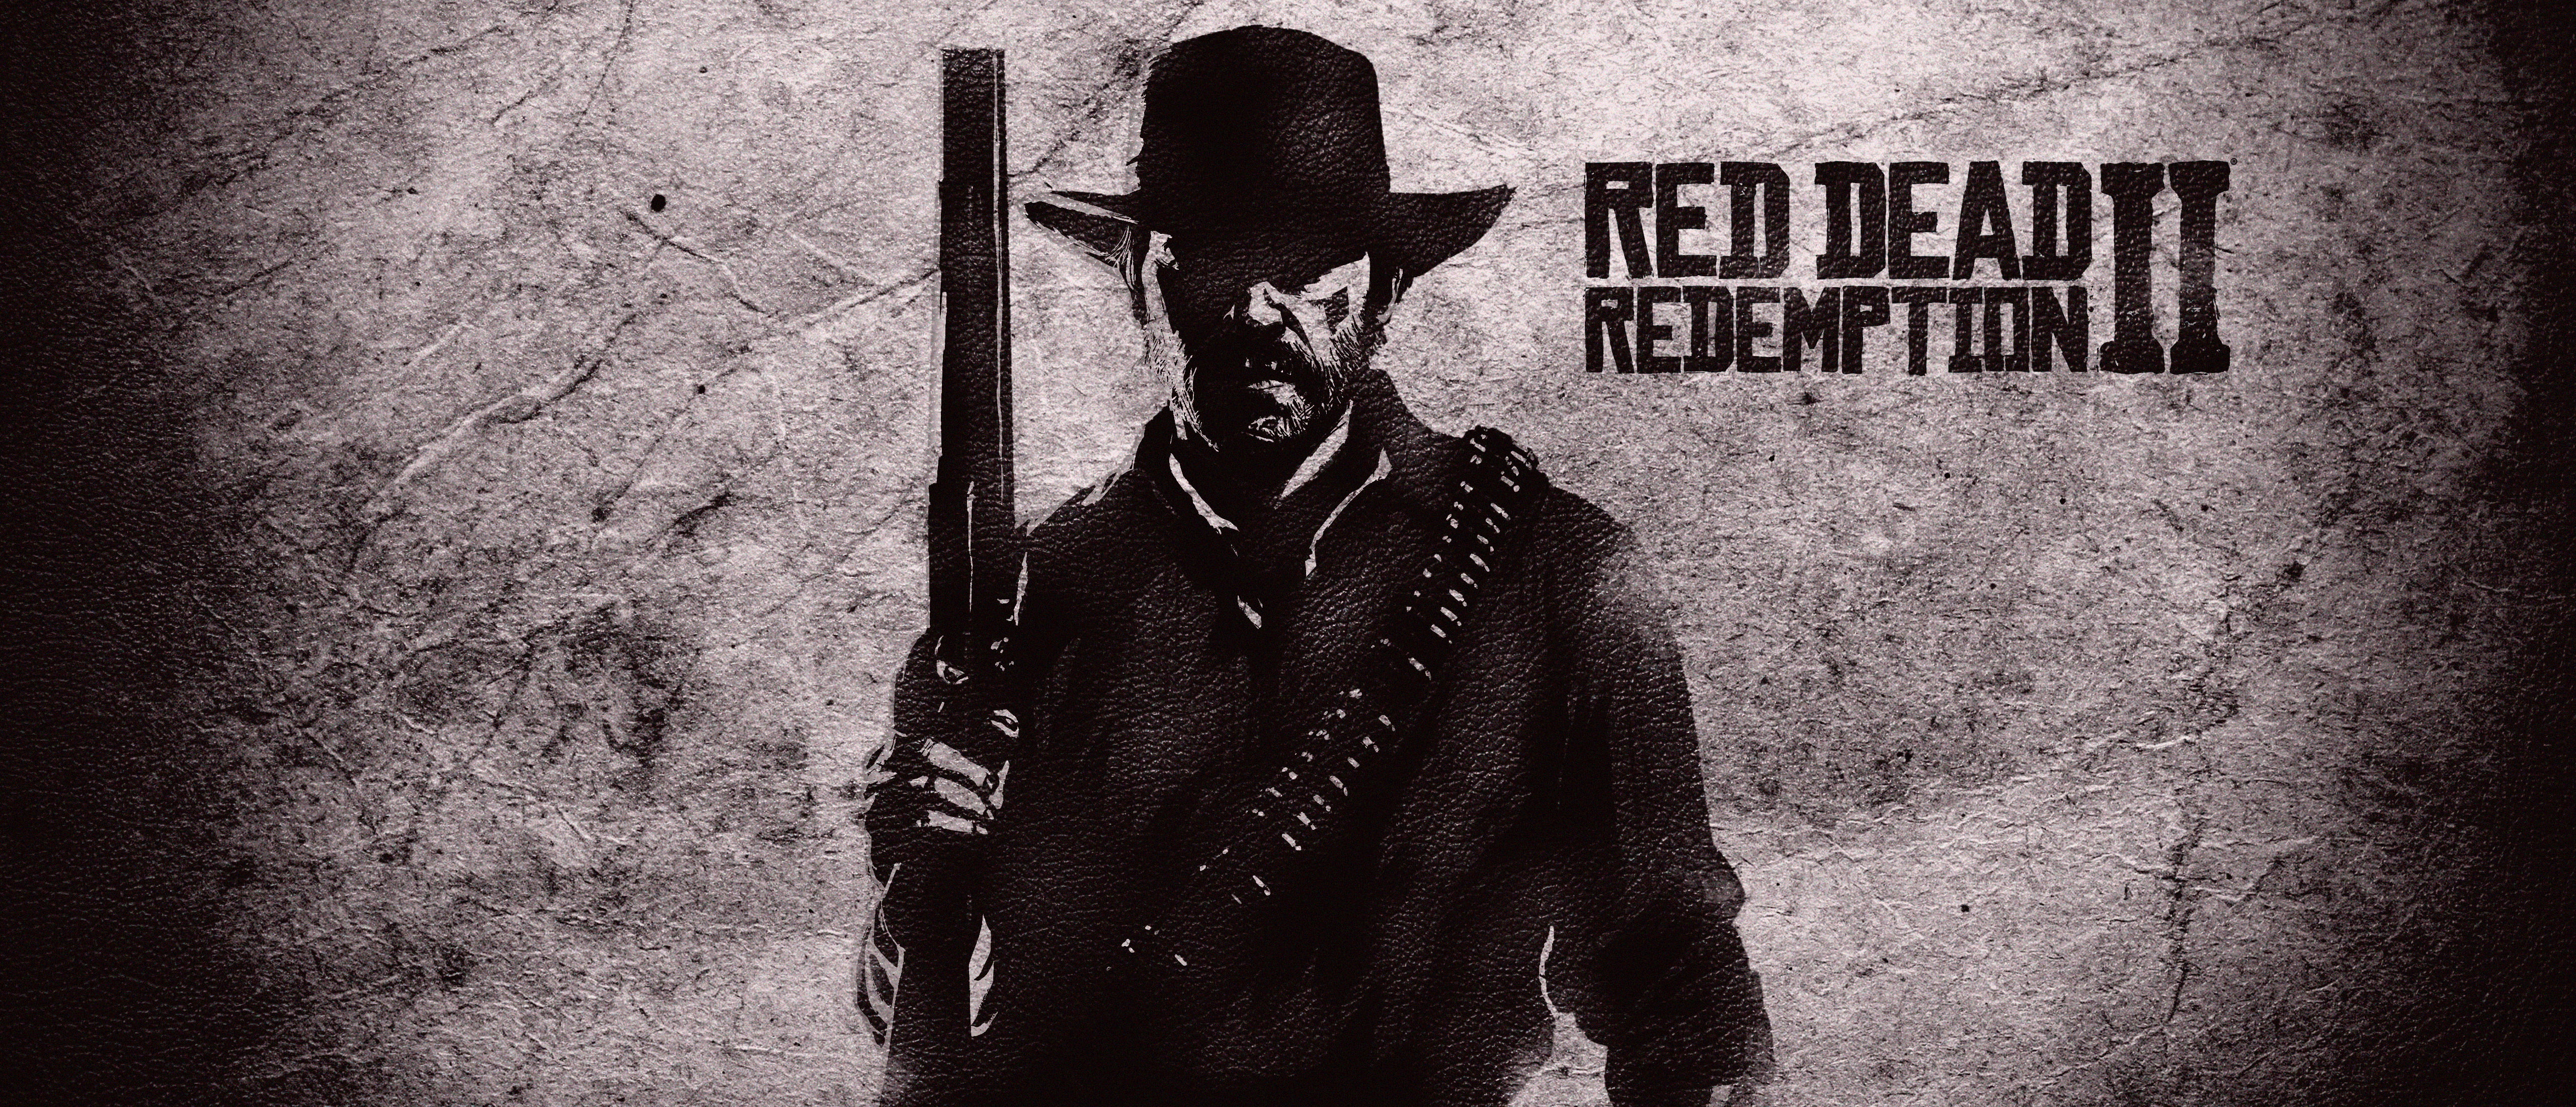 Red Dead Redemption, Red Dead Redemption 2, Arthur Morgan, Rockstar Games